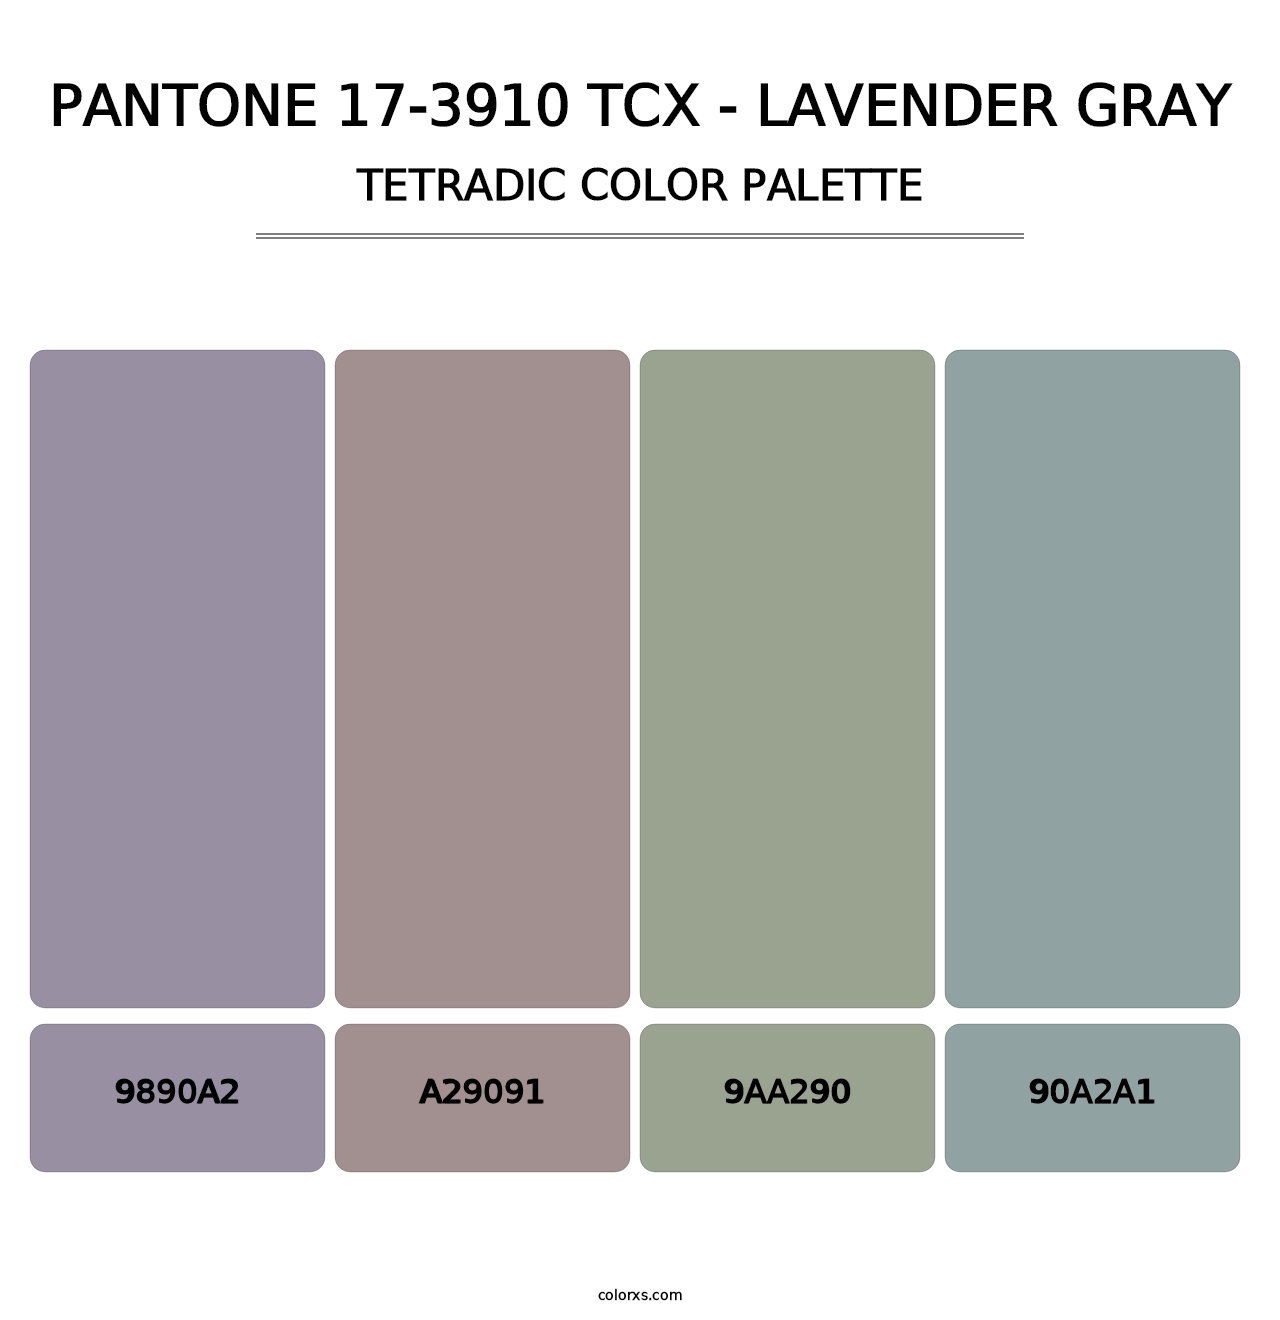 PANTONE 17-3910 TCX - Lavender Gray - Tetradic Color Palette